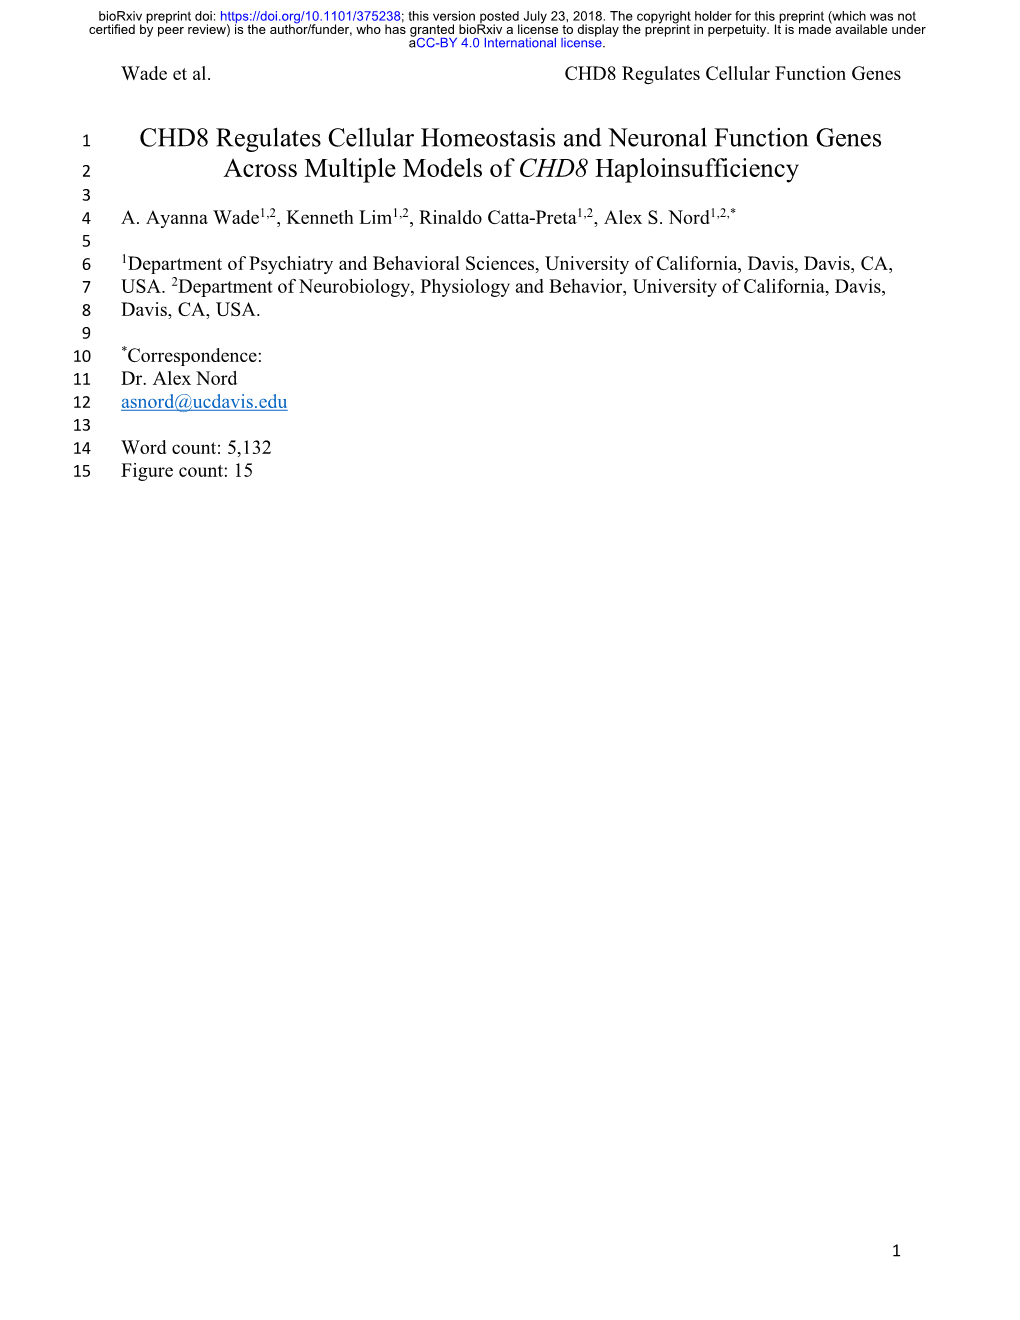 CHD8 Regulates Cellular Function Genes